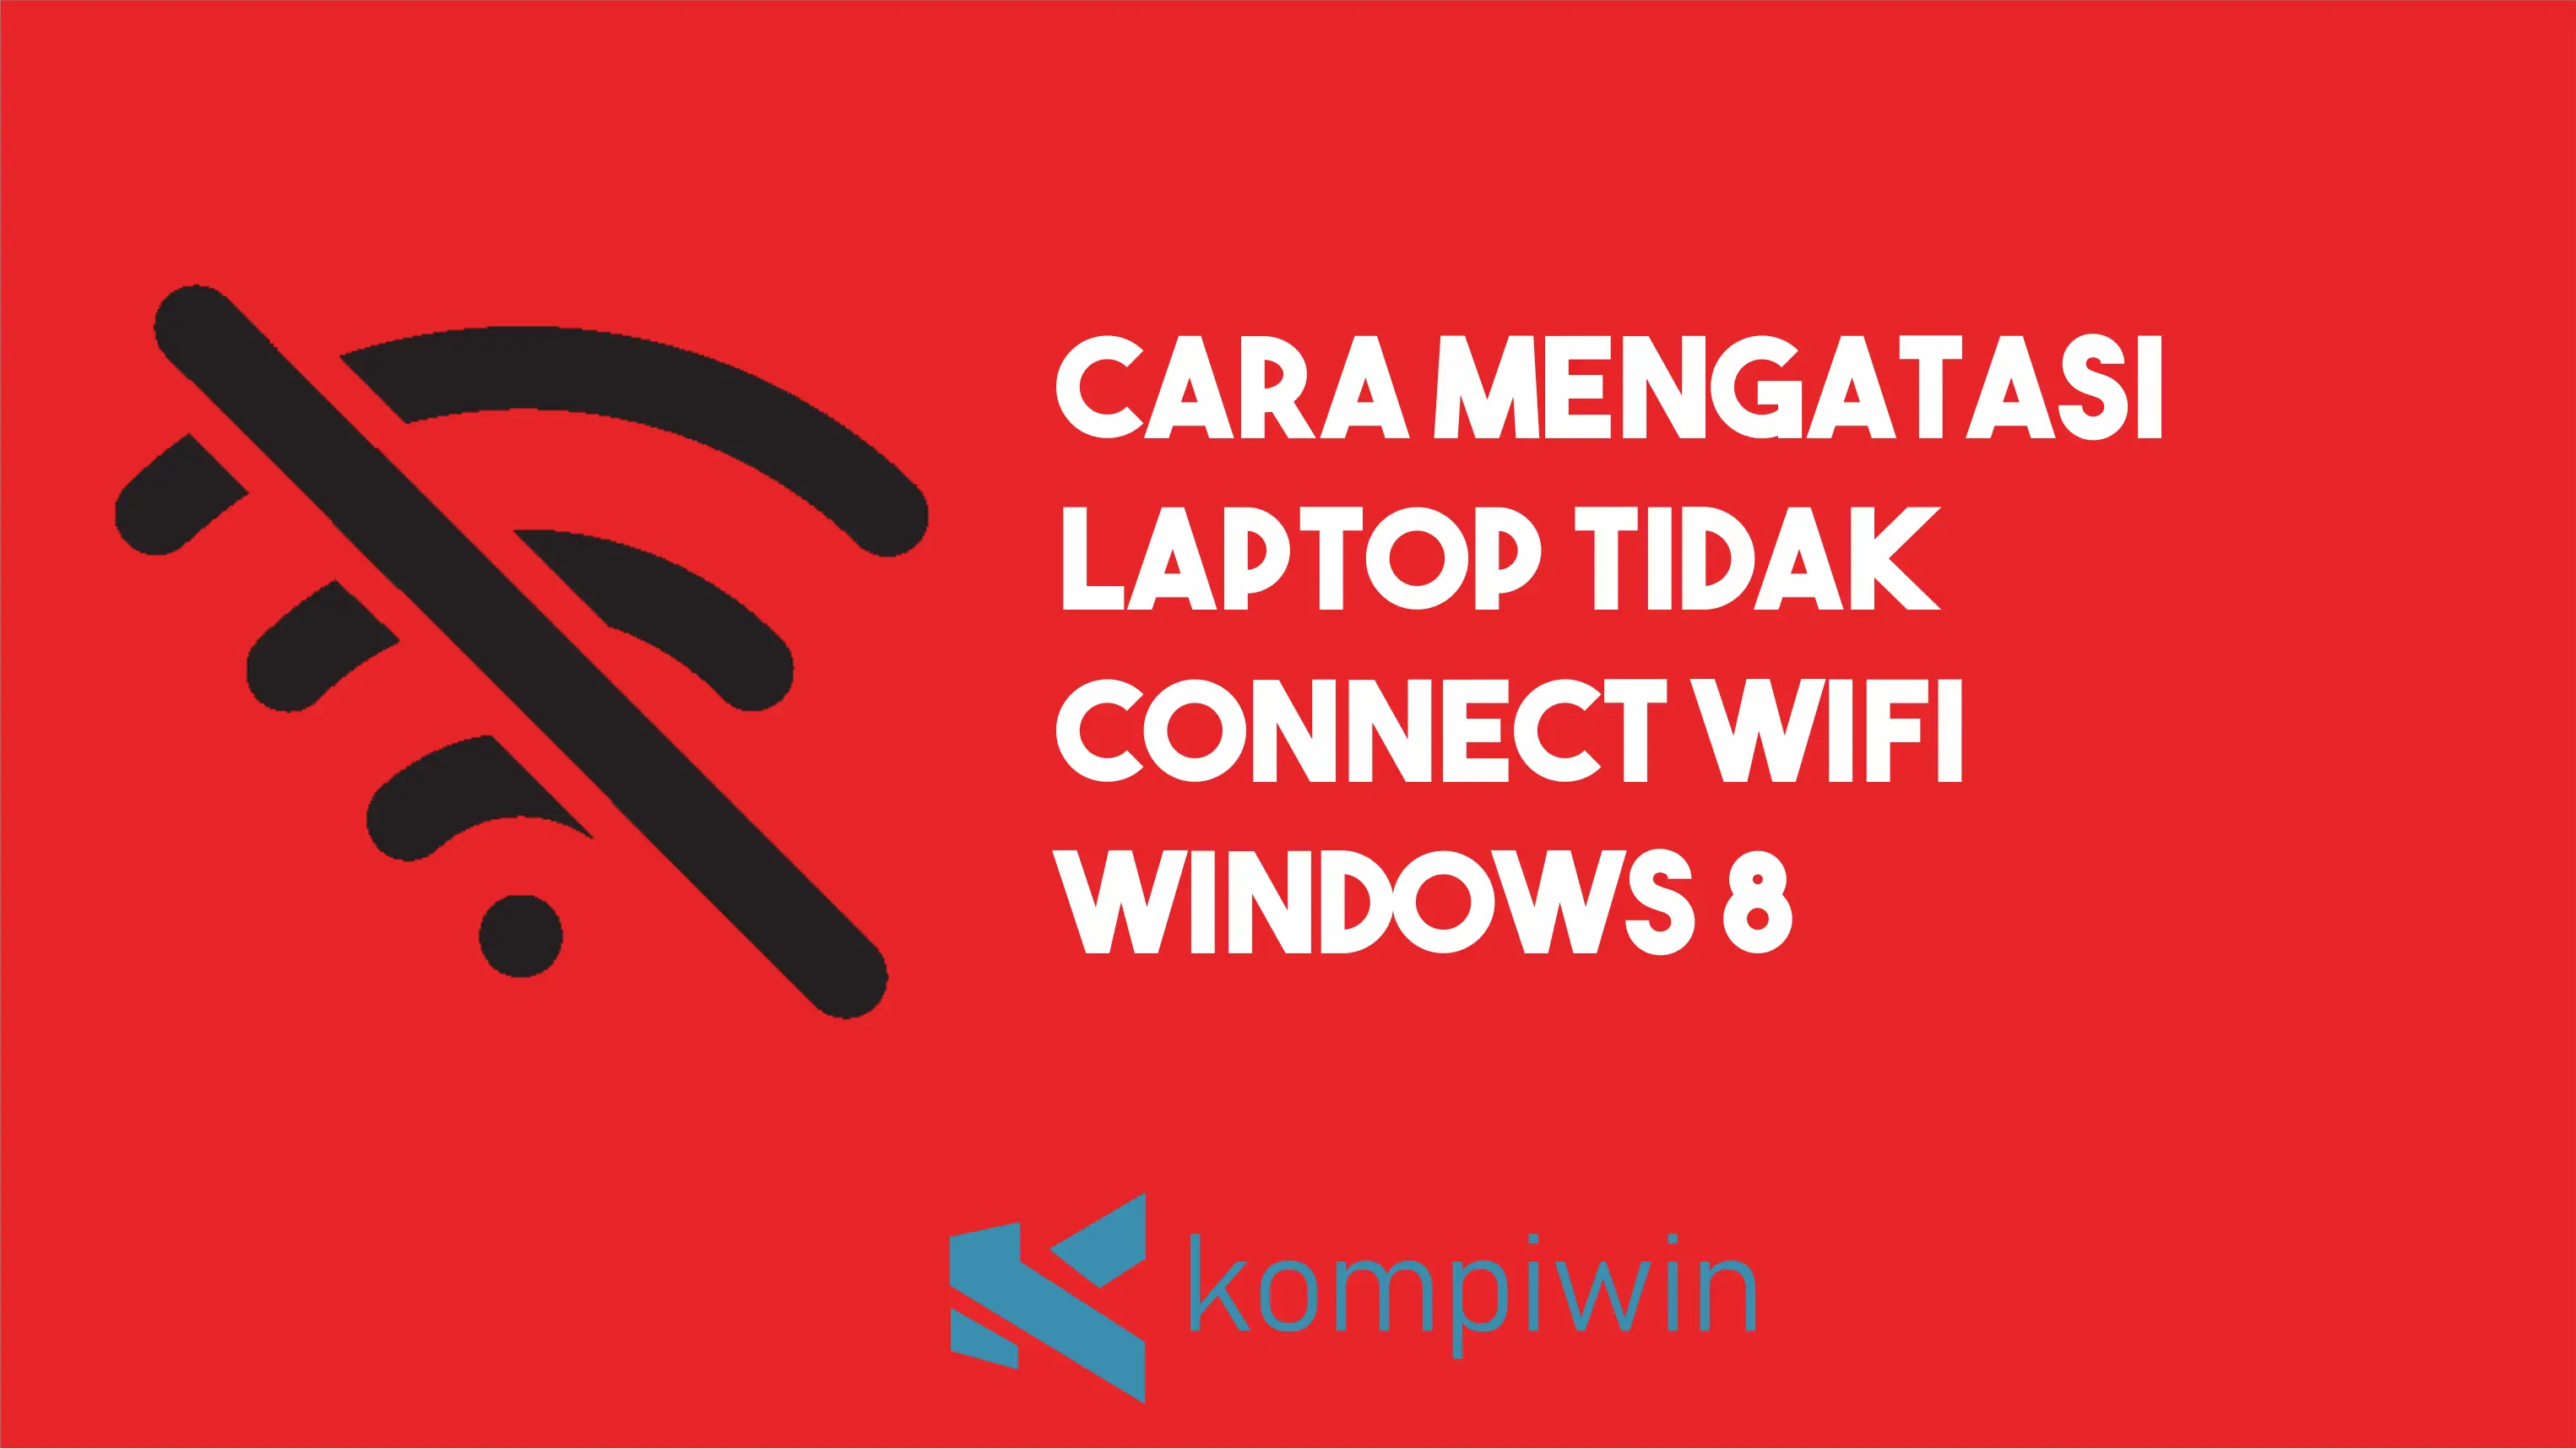 Cara Mengatasi Laptop Tidak Connect WiFi Windows 8 1